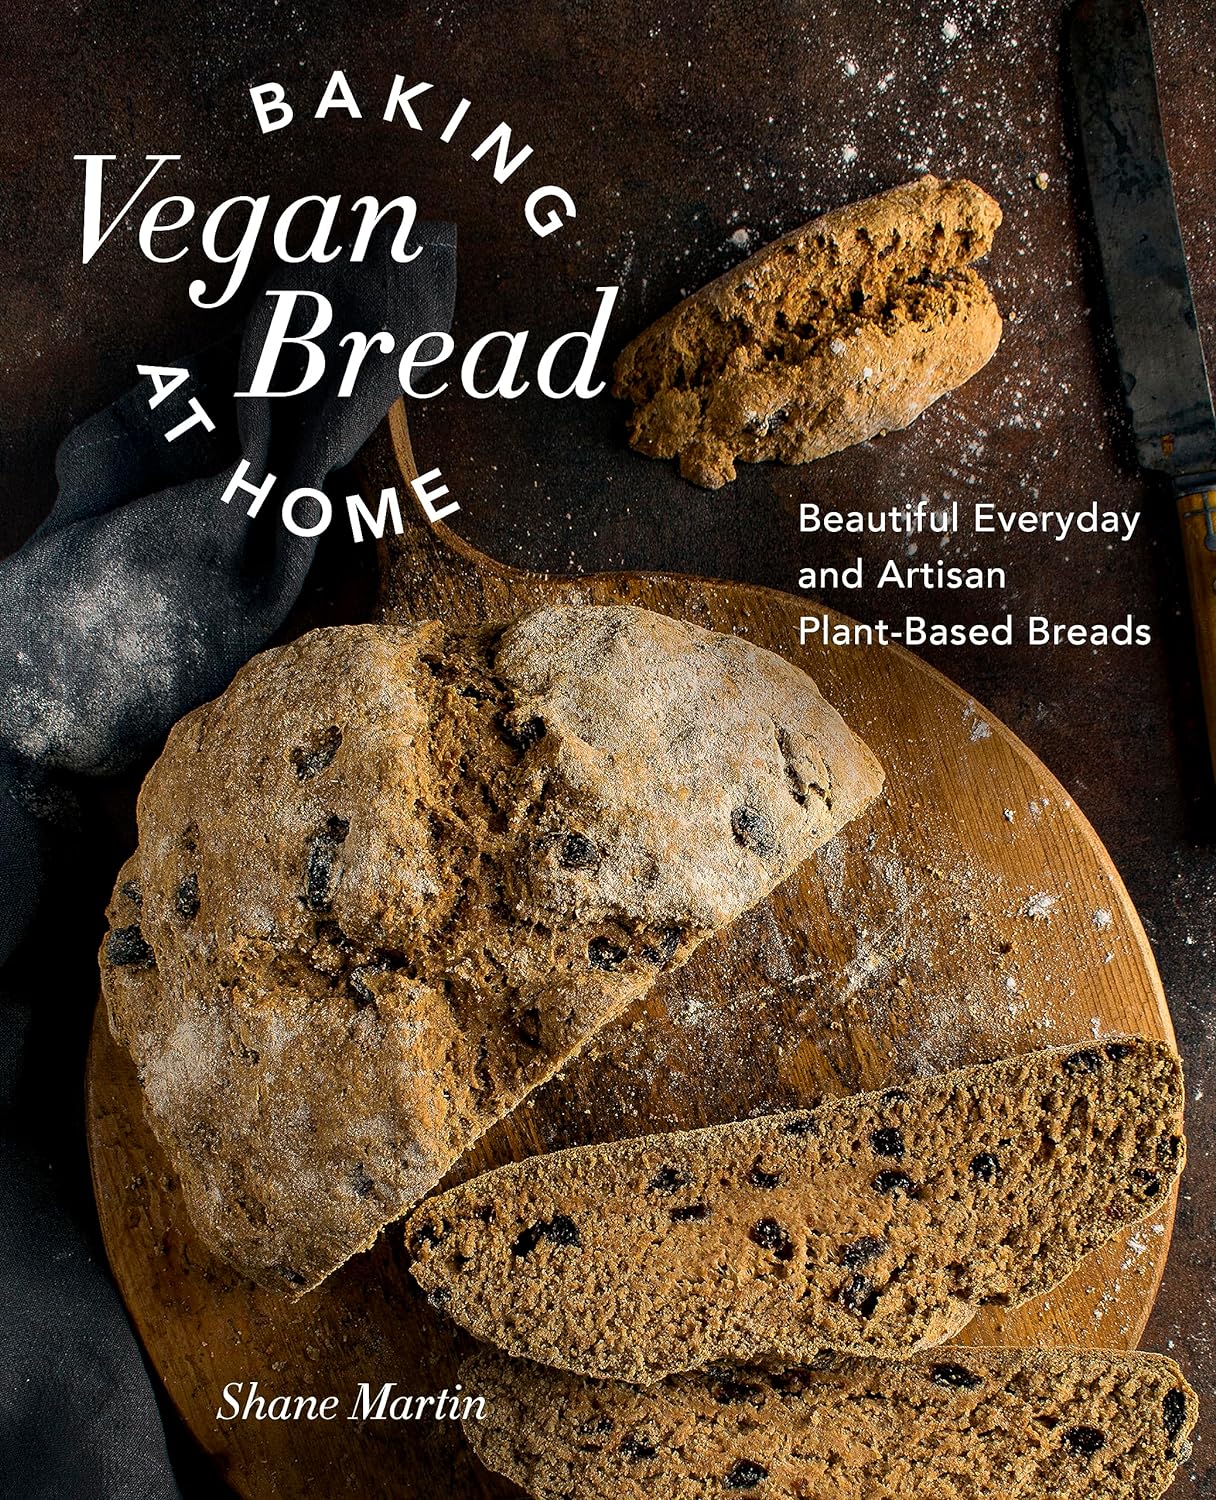 Baking Vegan Bread by Shane Martin